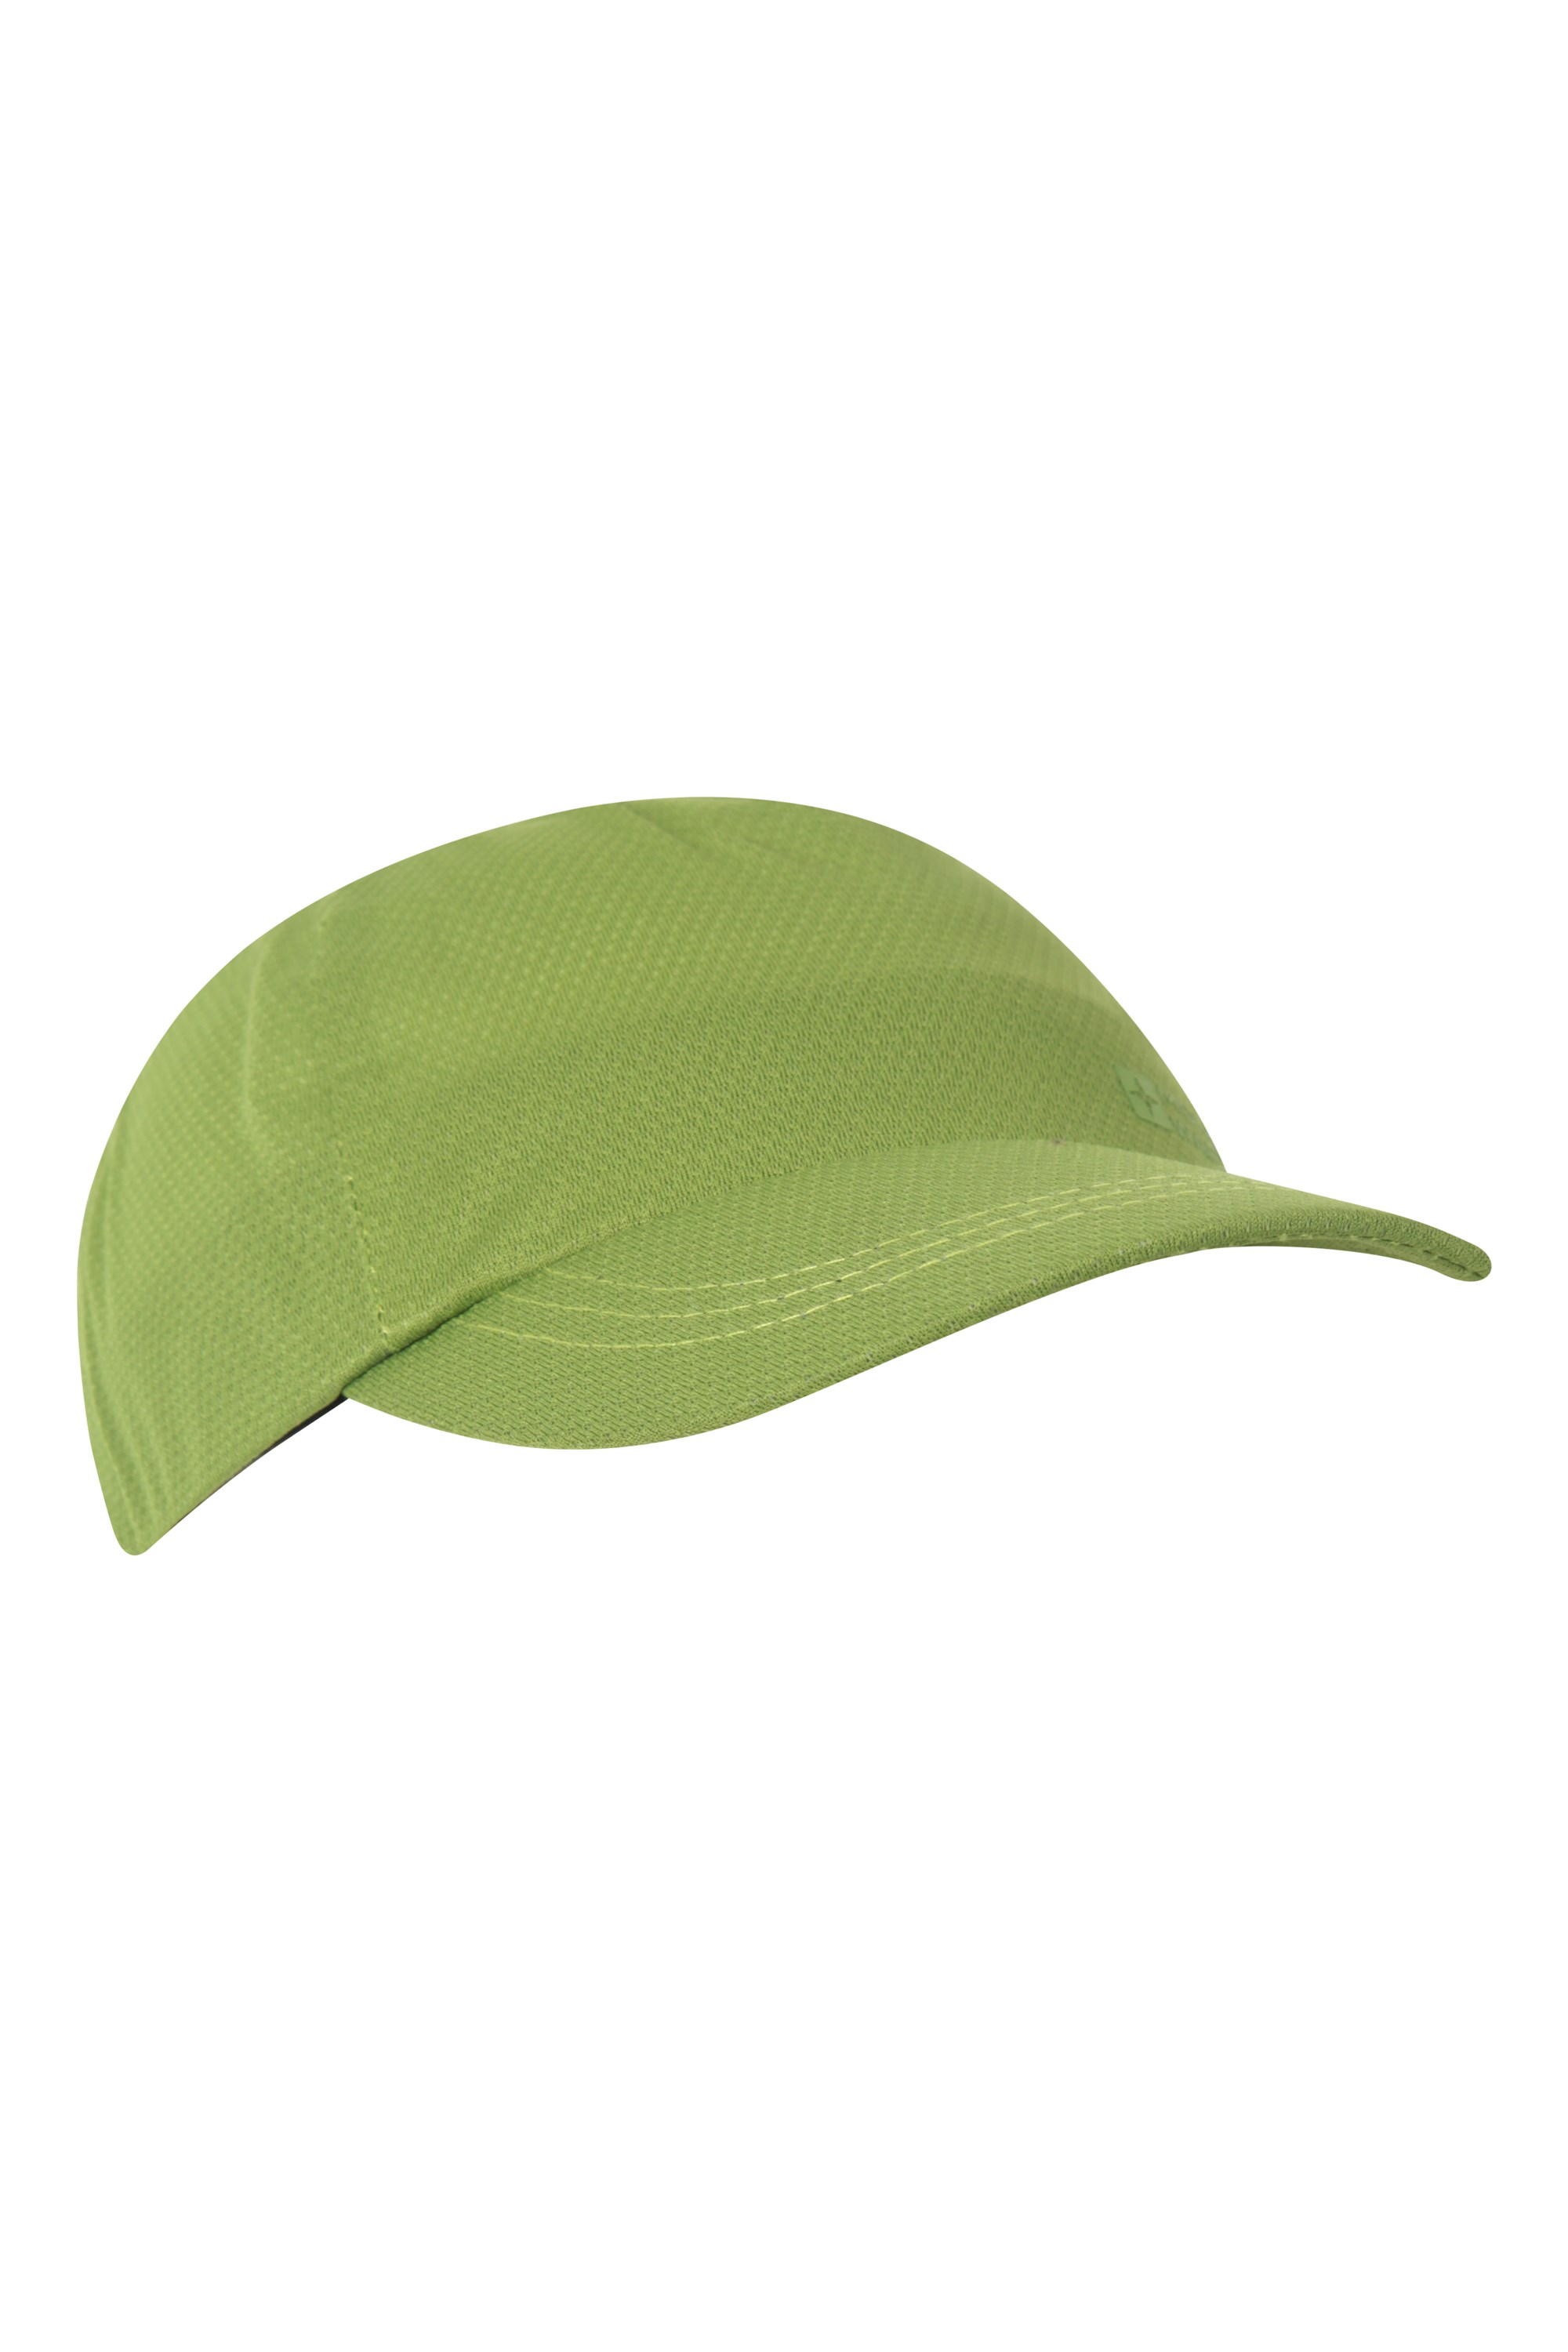 Waterproof Kids Baseball Cap - Green